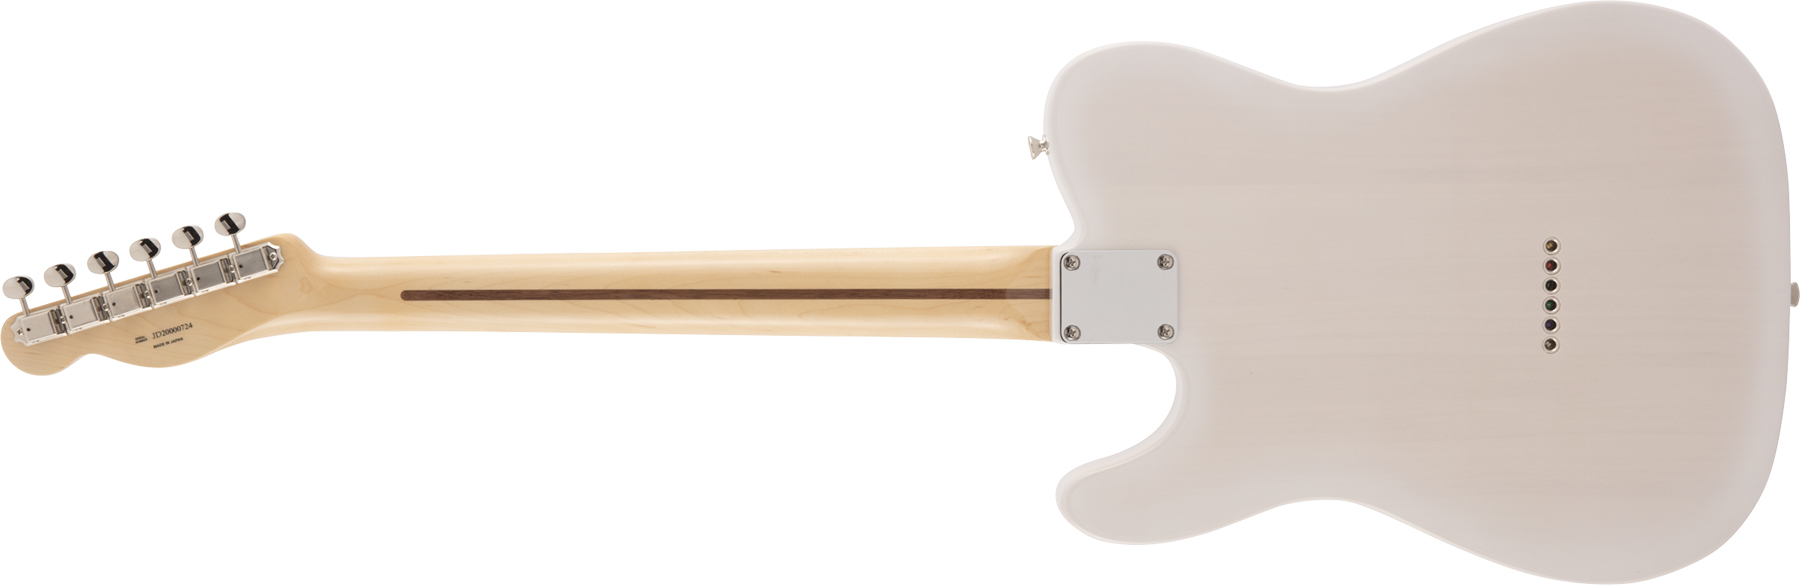 Fender Tele Traditional 50s Jap Mn - White Blonde - E-Gitarre in Teleform - Variation 1